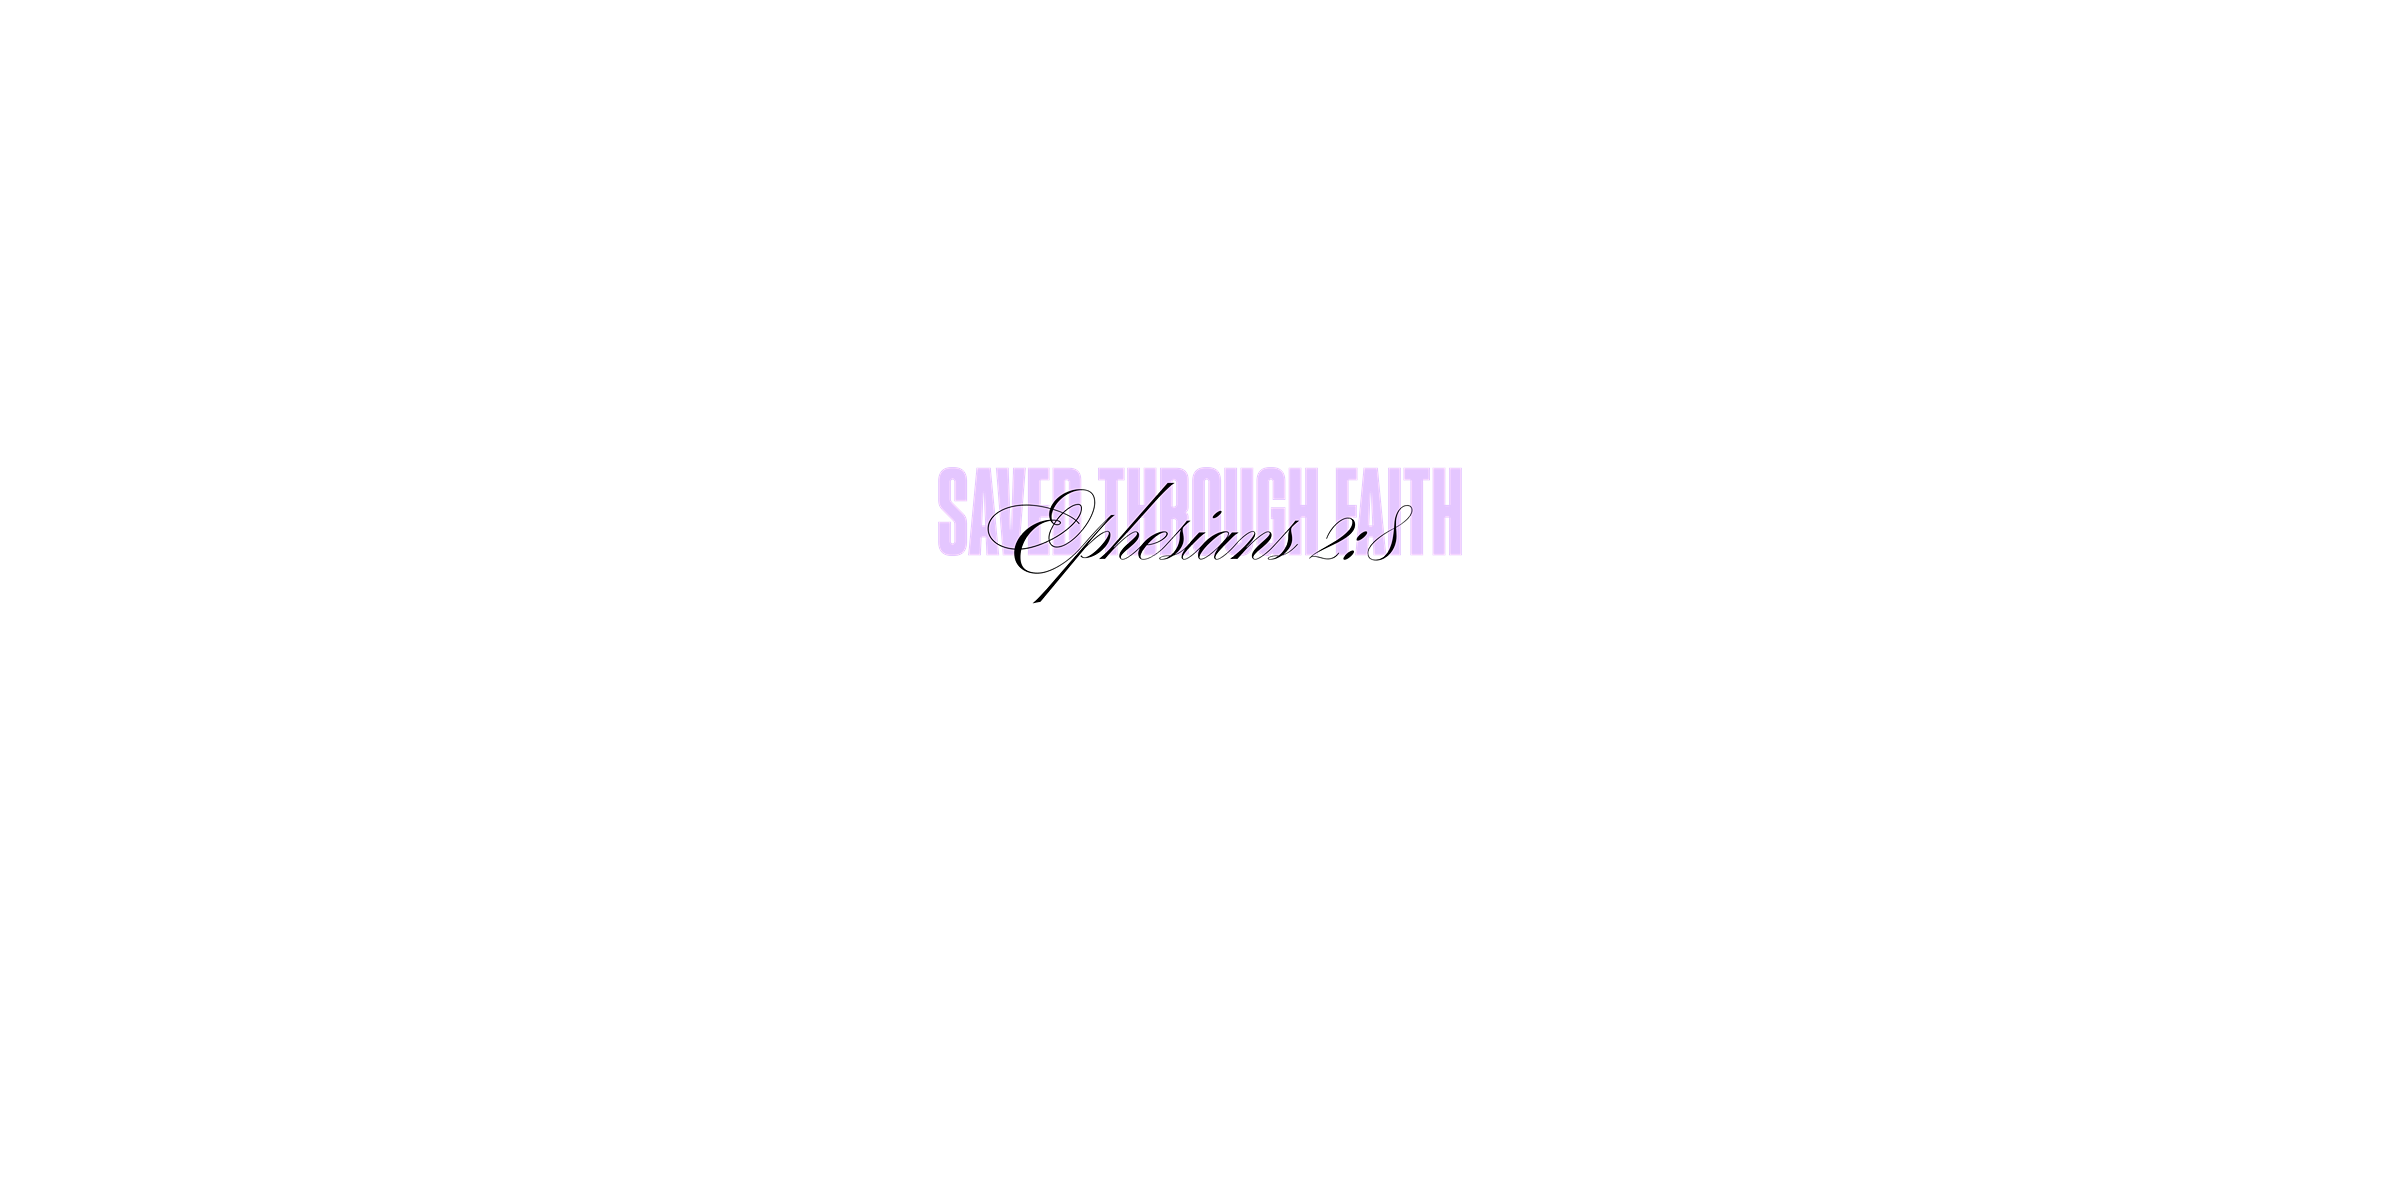 Ephesians 2:8 - saved through faith